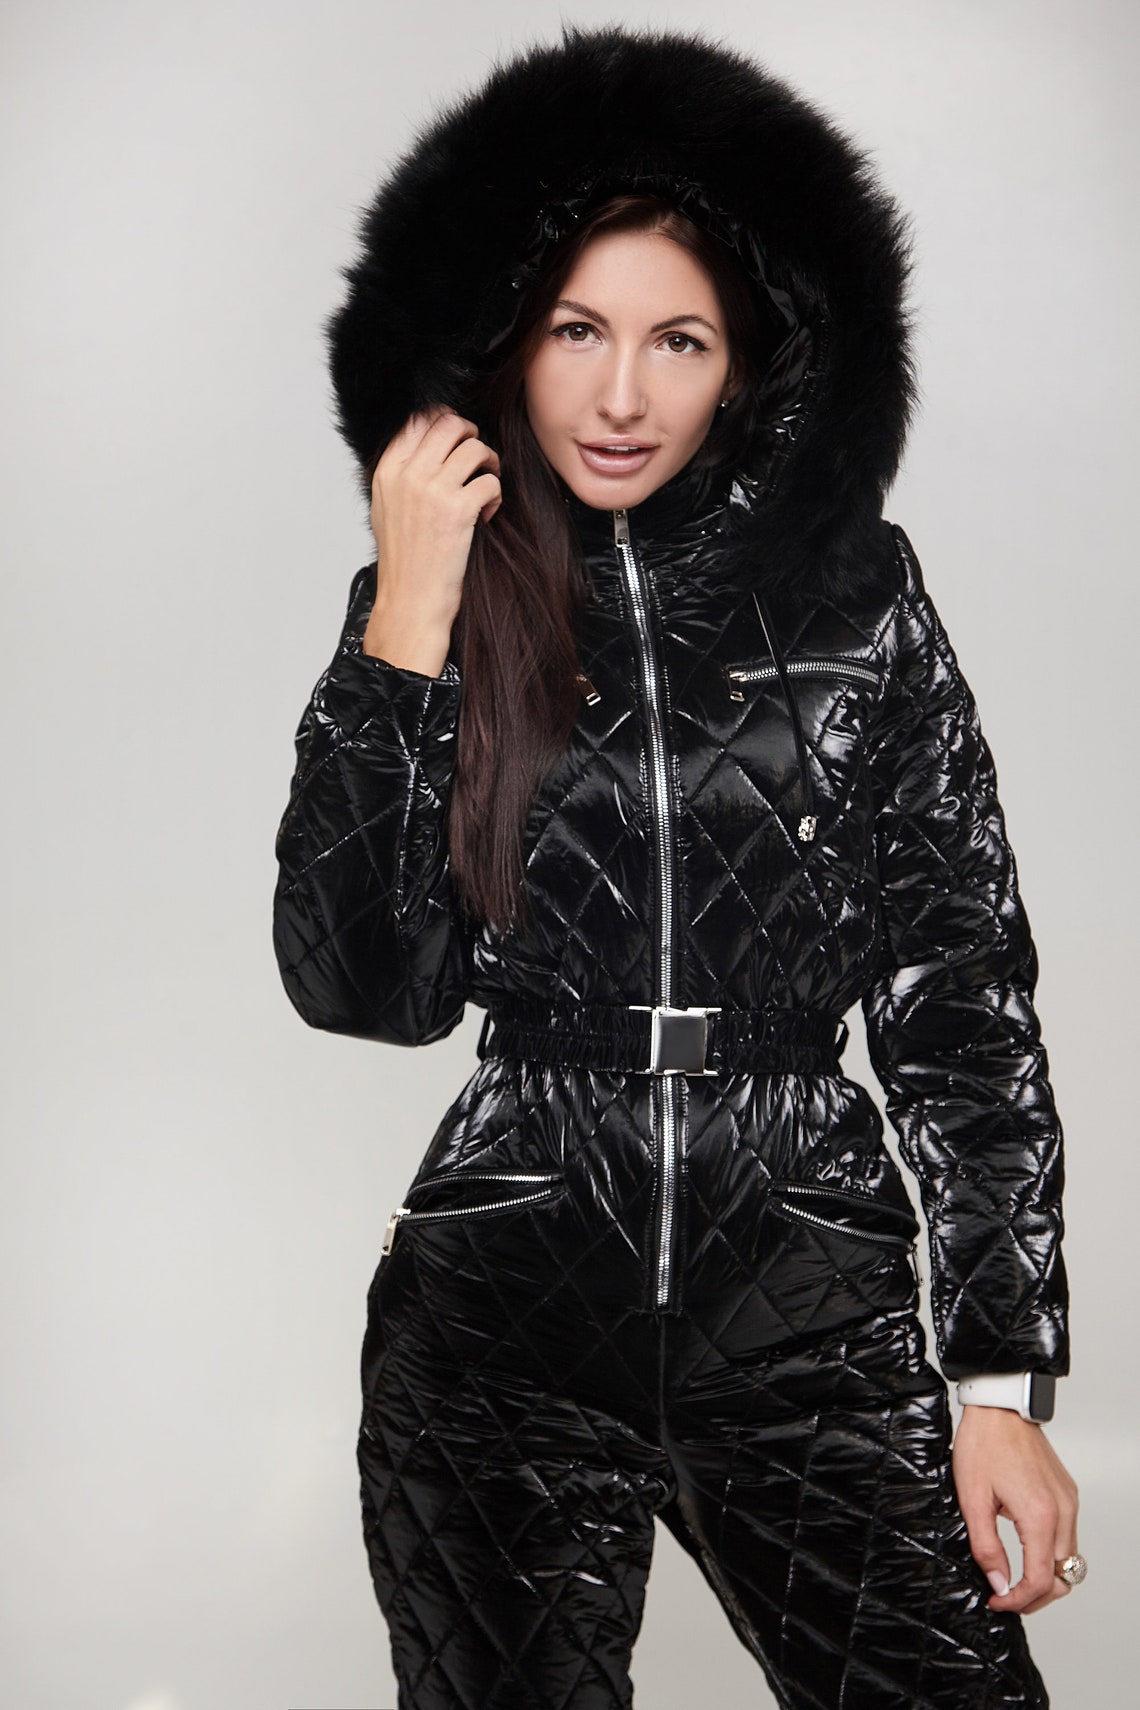 Black one piece snowsuit women Winter fashion clothing | Etsy